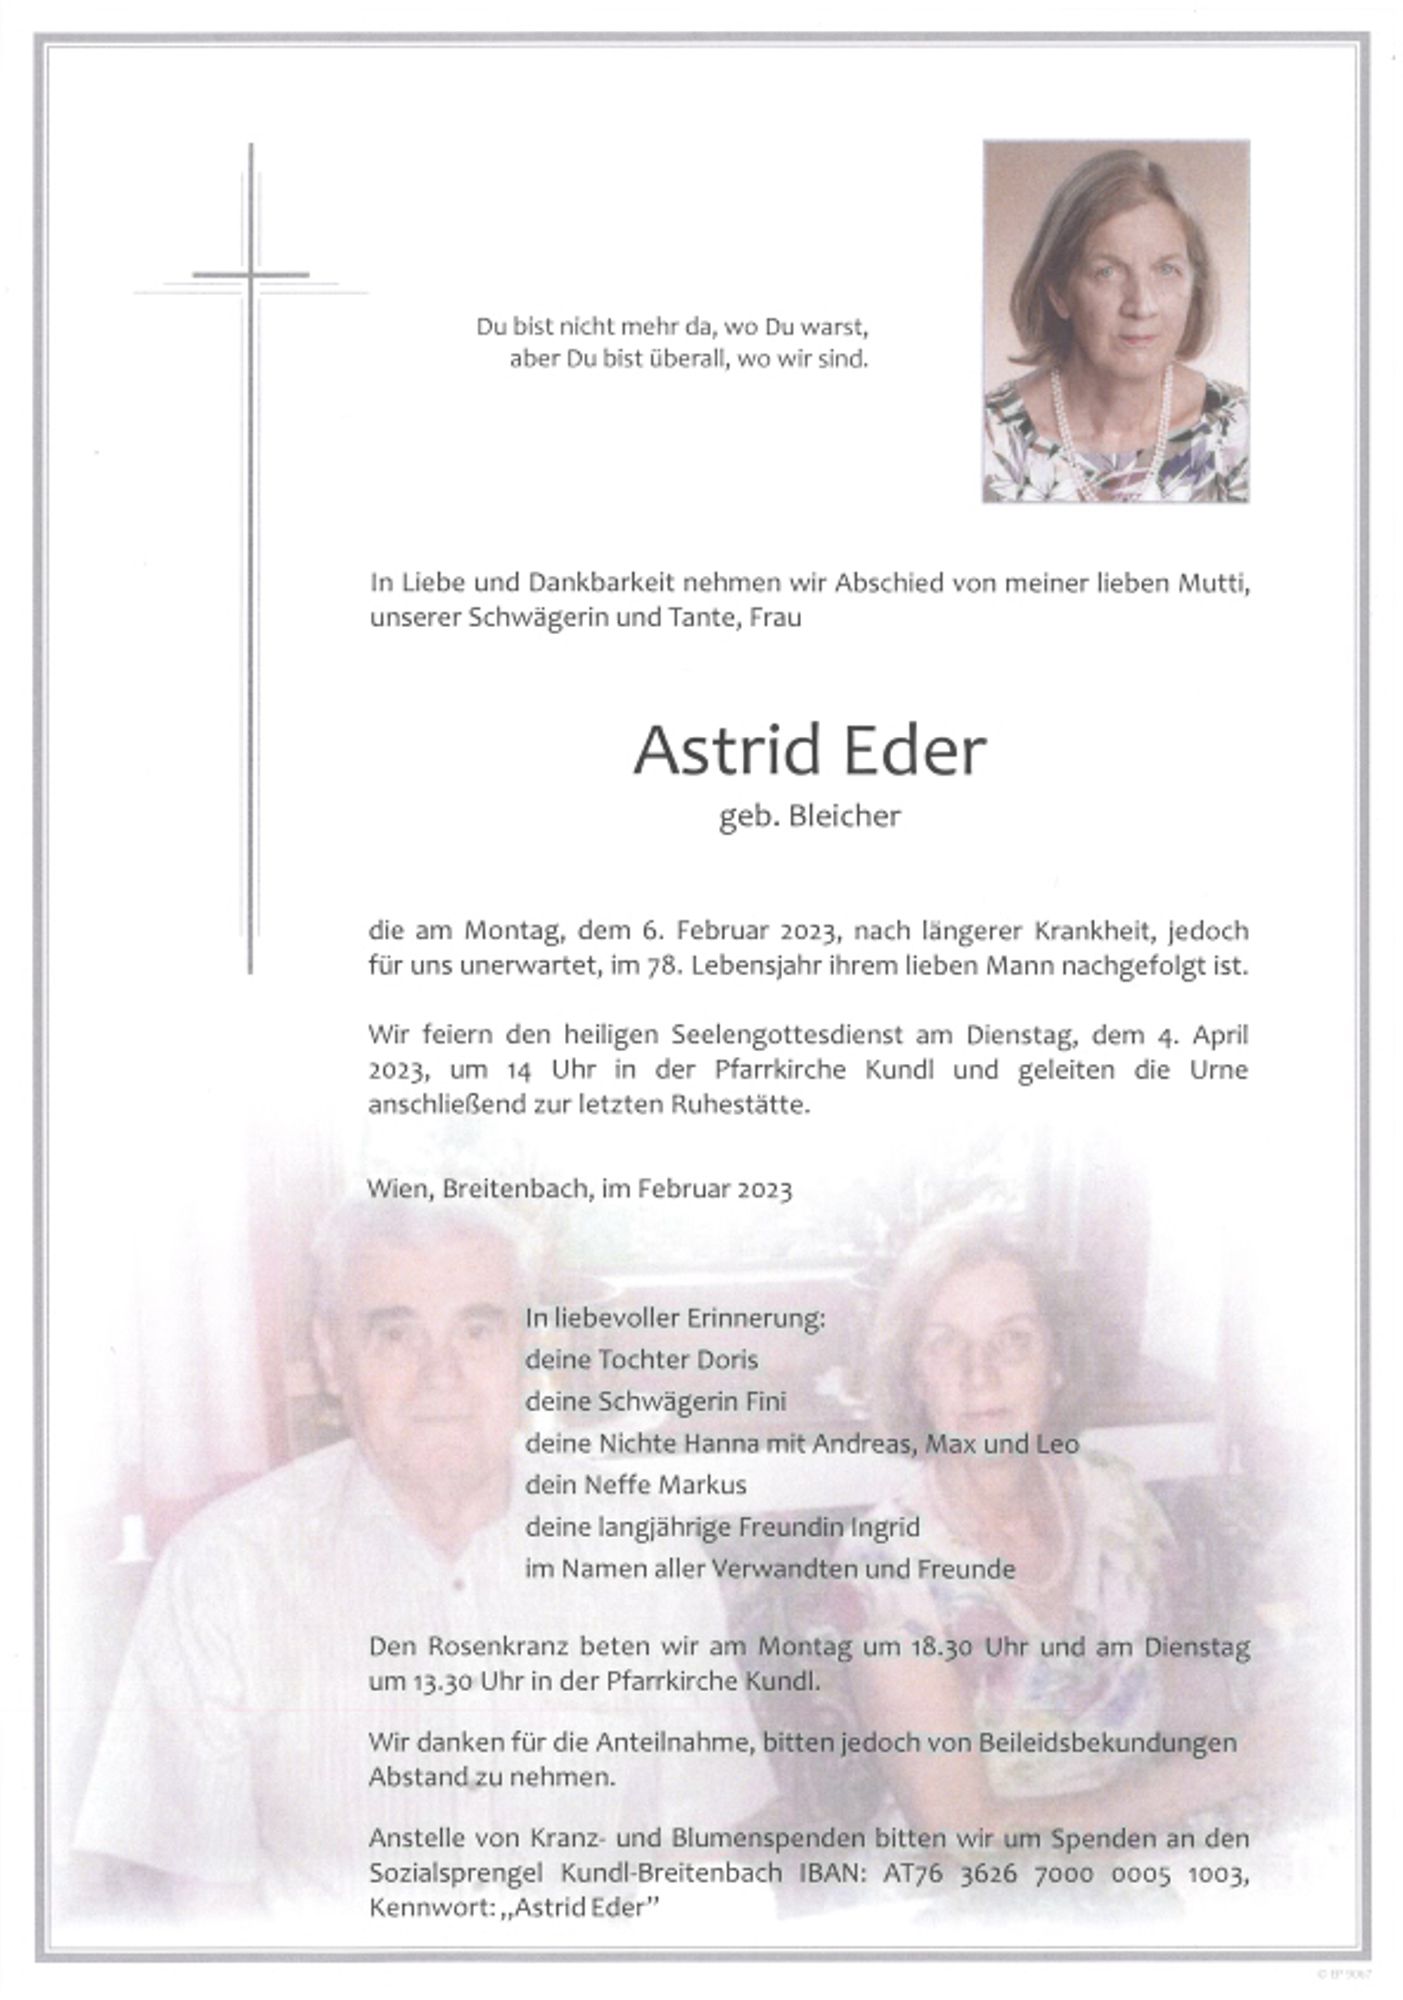 Astrid Eder